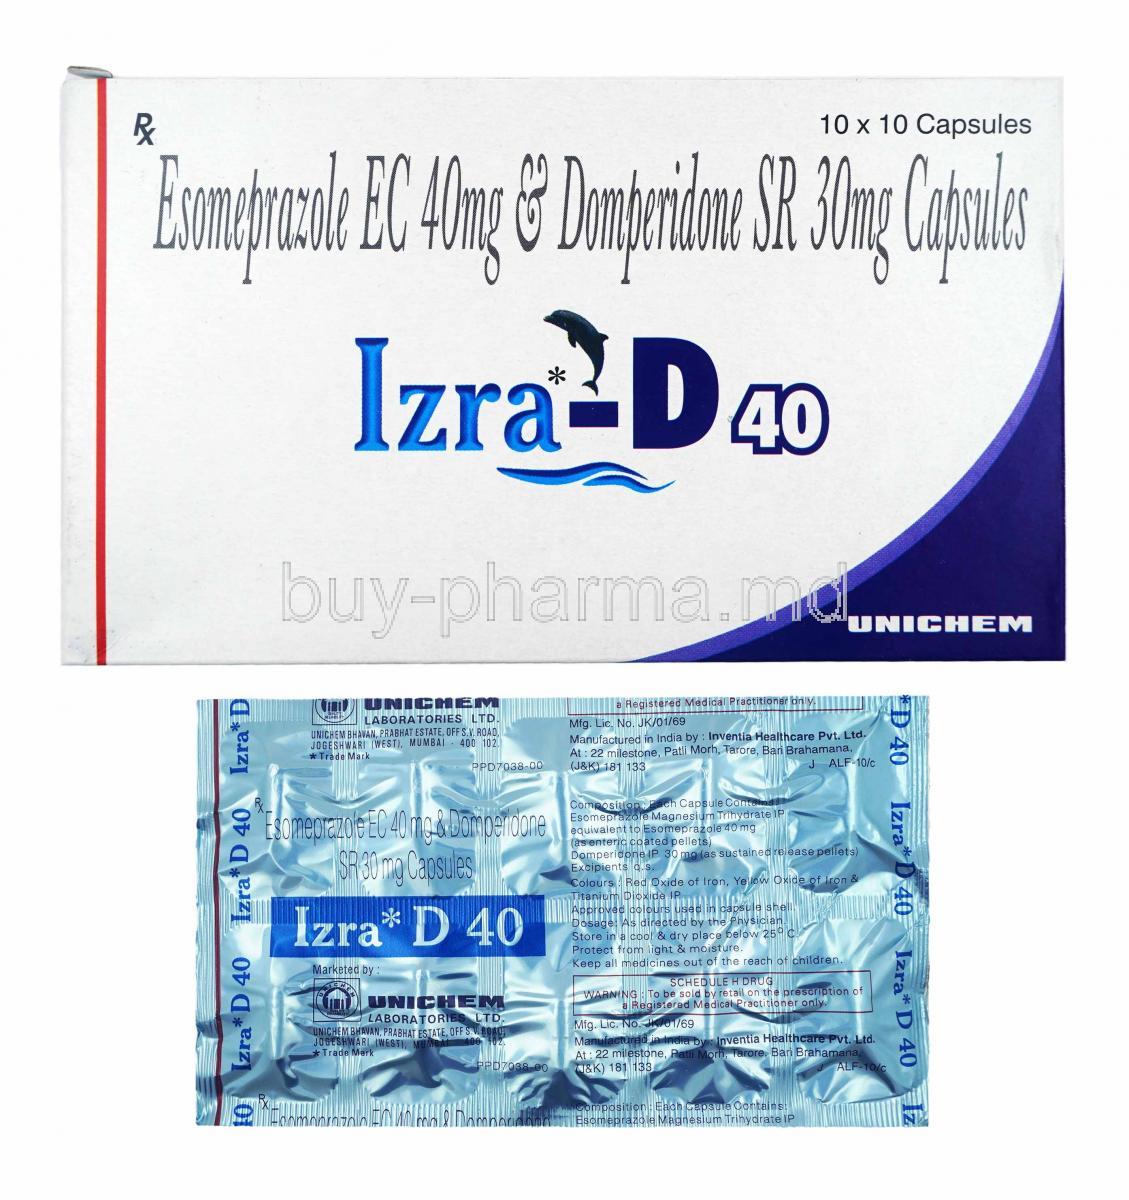 Izra-D, Domperidone and Esomeprazole 40mg box and capsules